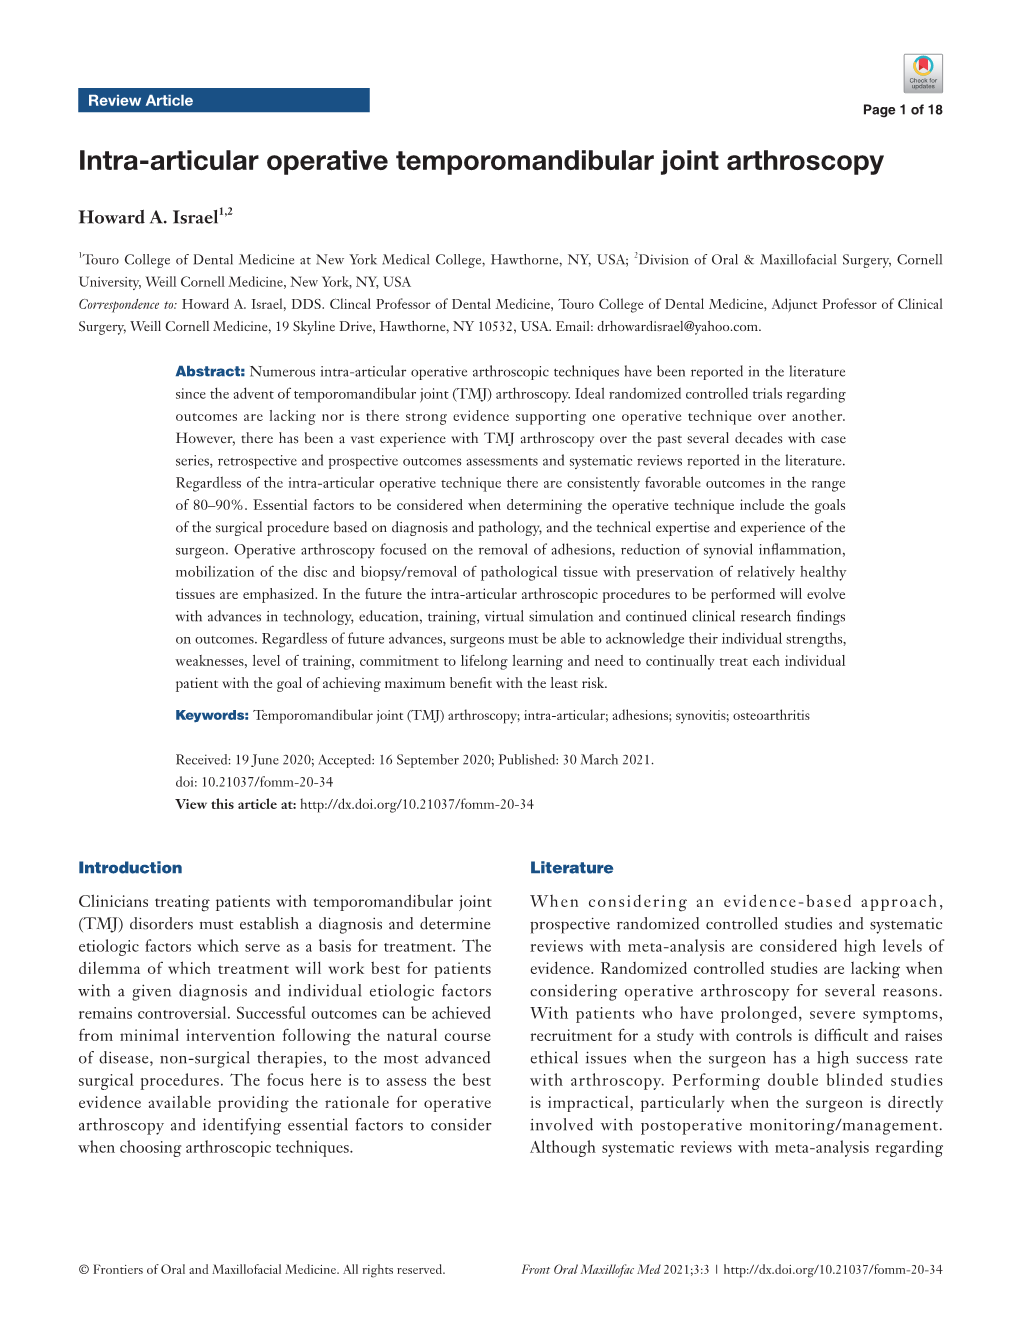 Intra-Articular Operative Temporomandibular Joint Arthroscopy